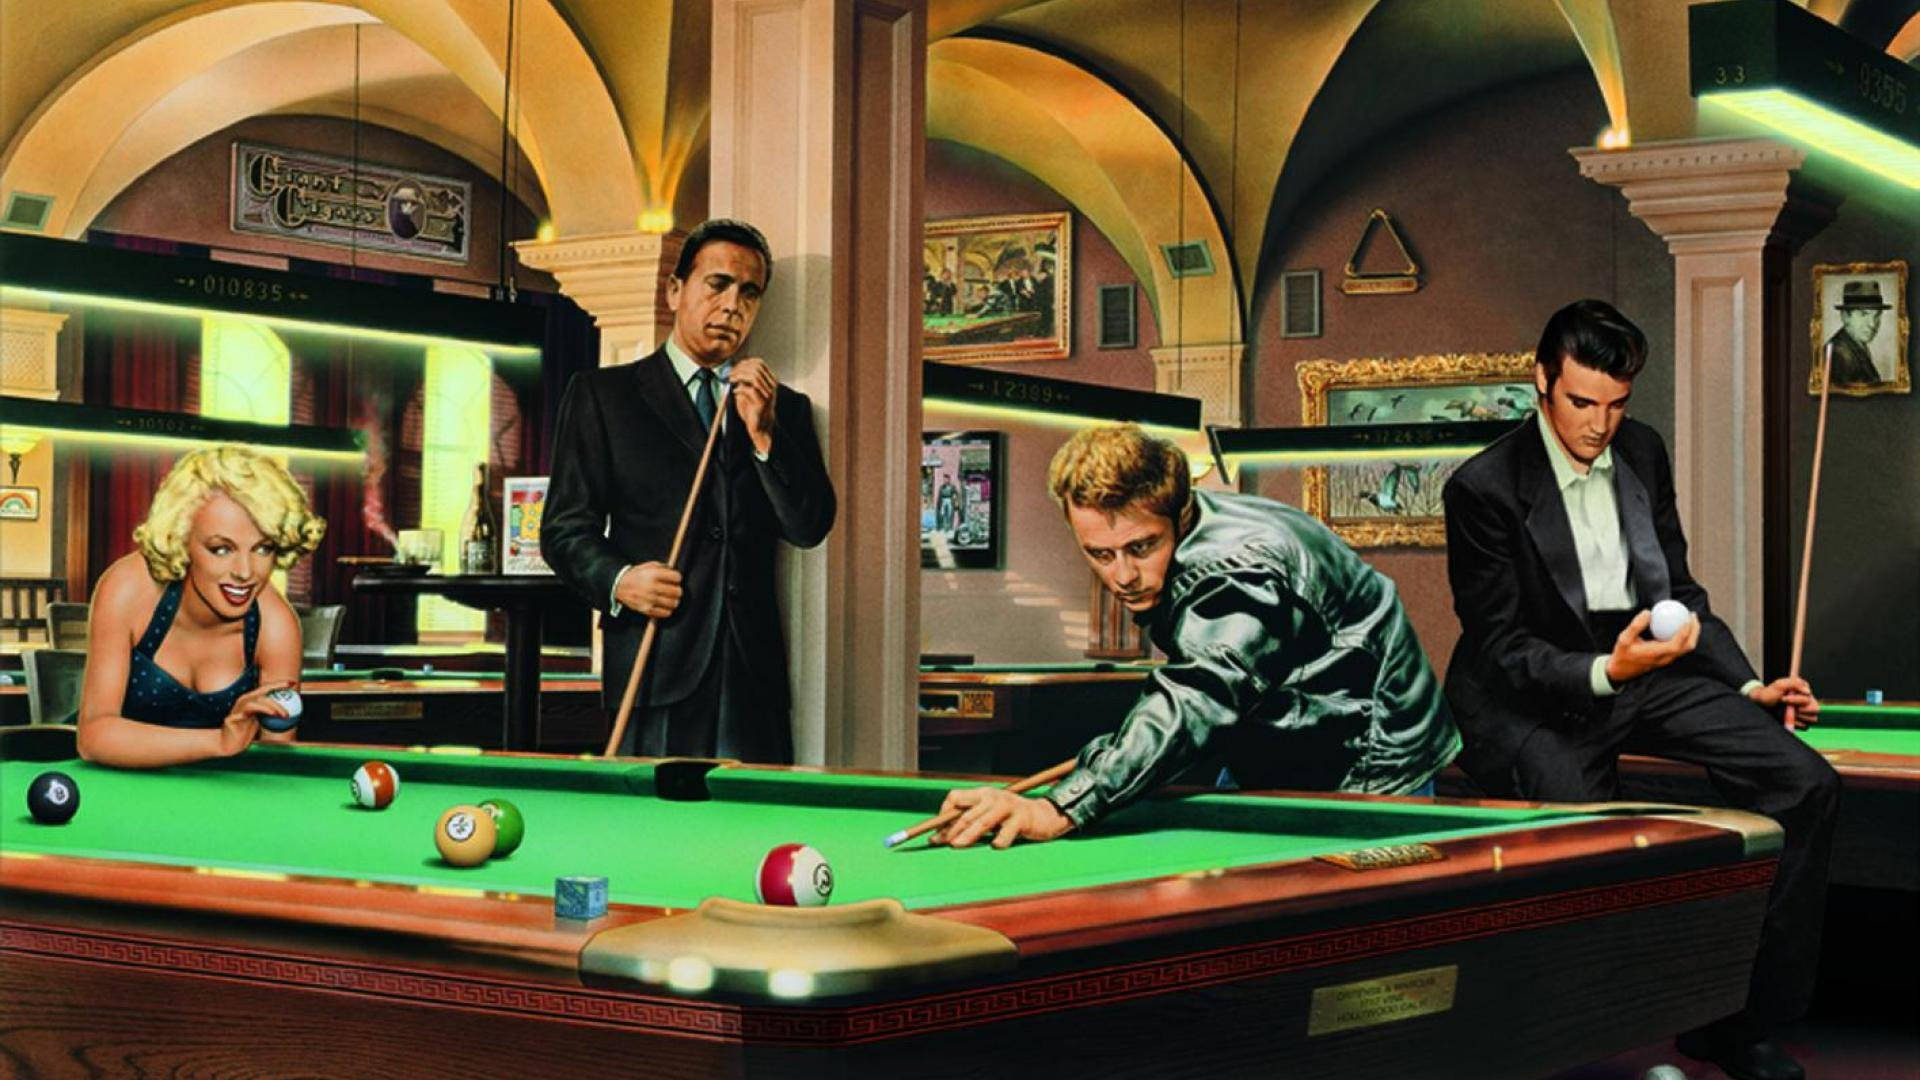 "James Dean demonstrating his pool skills" Wallpaper